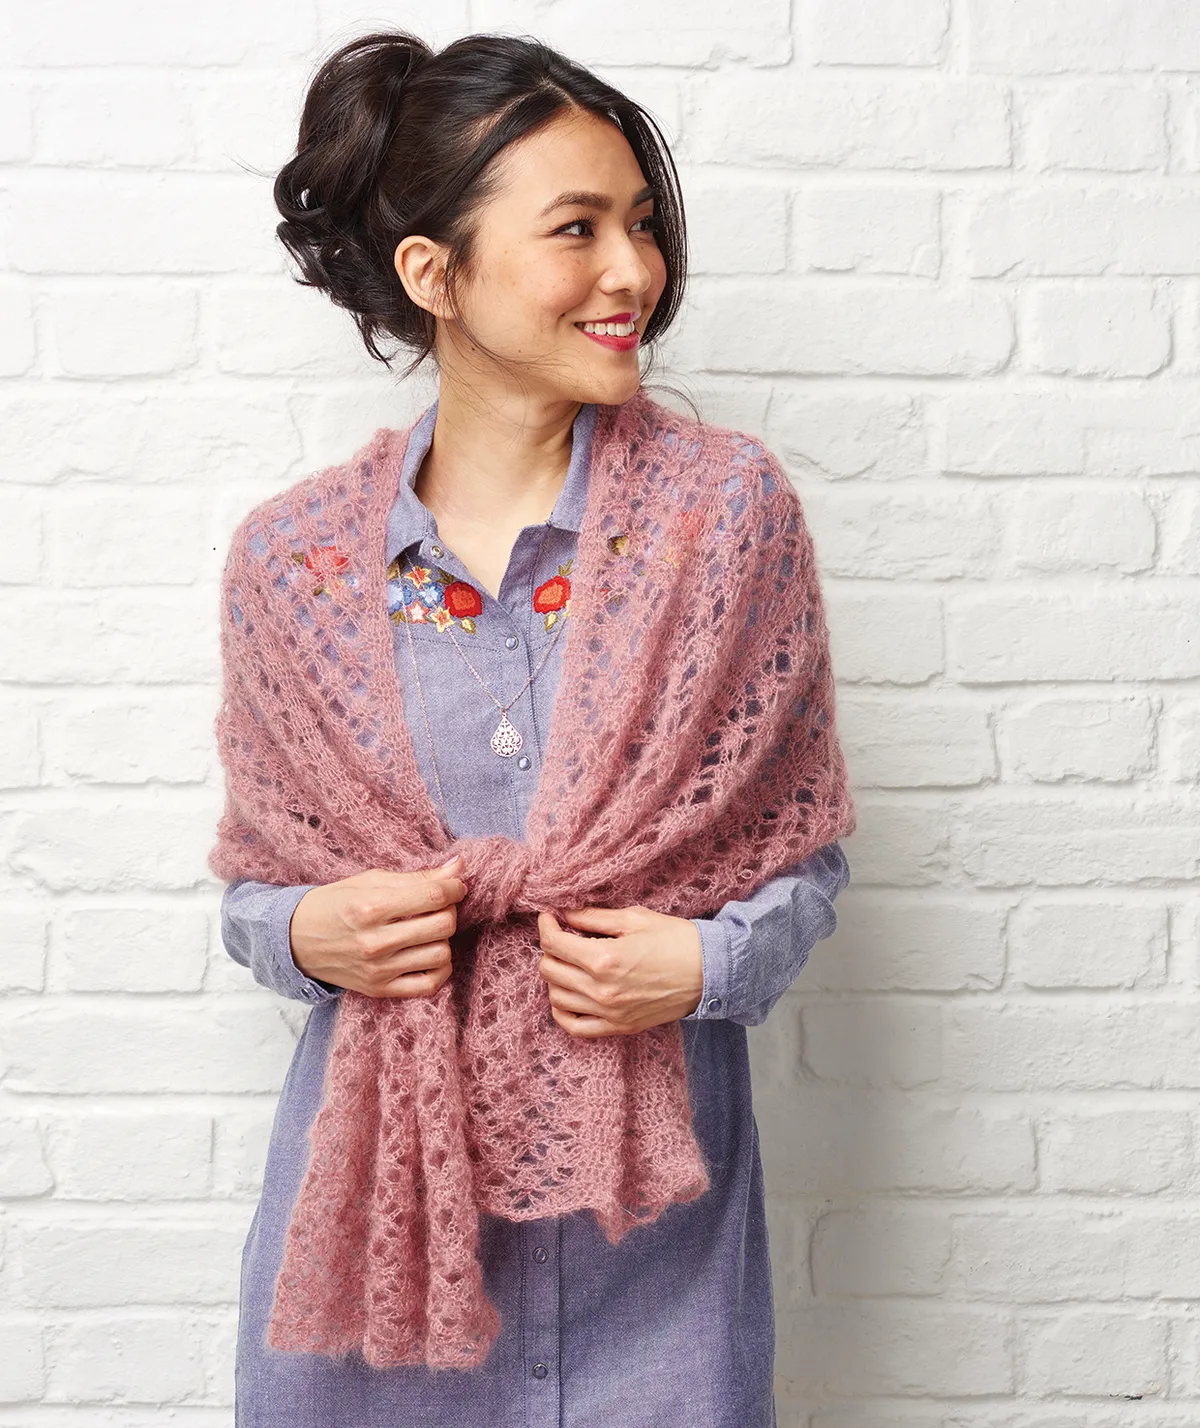 foxtrot crochet shawl pattern